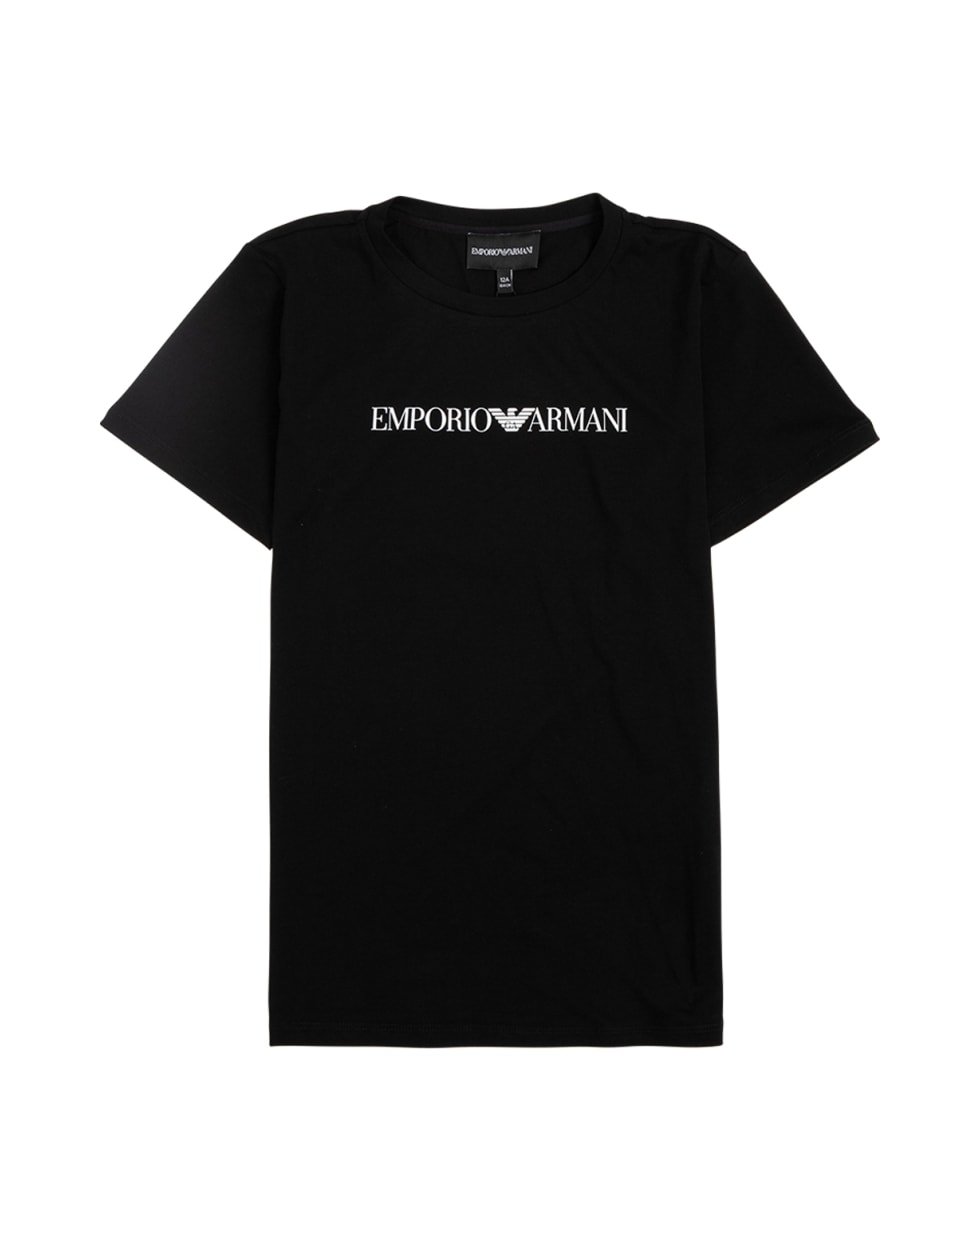 Emporio Armani Black Cotton T-shirt With Logo Print - Black